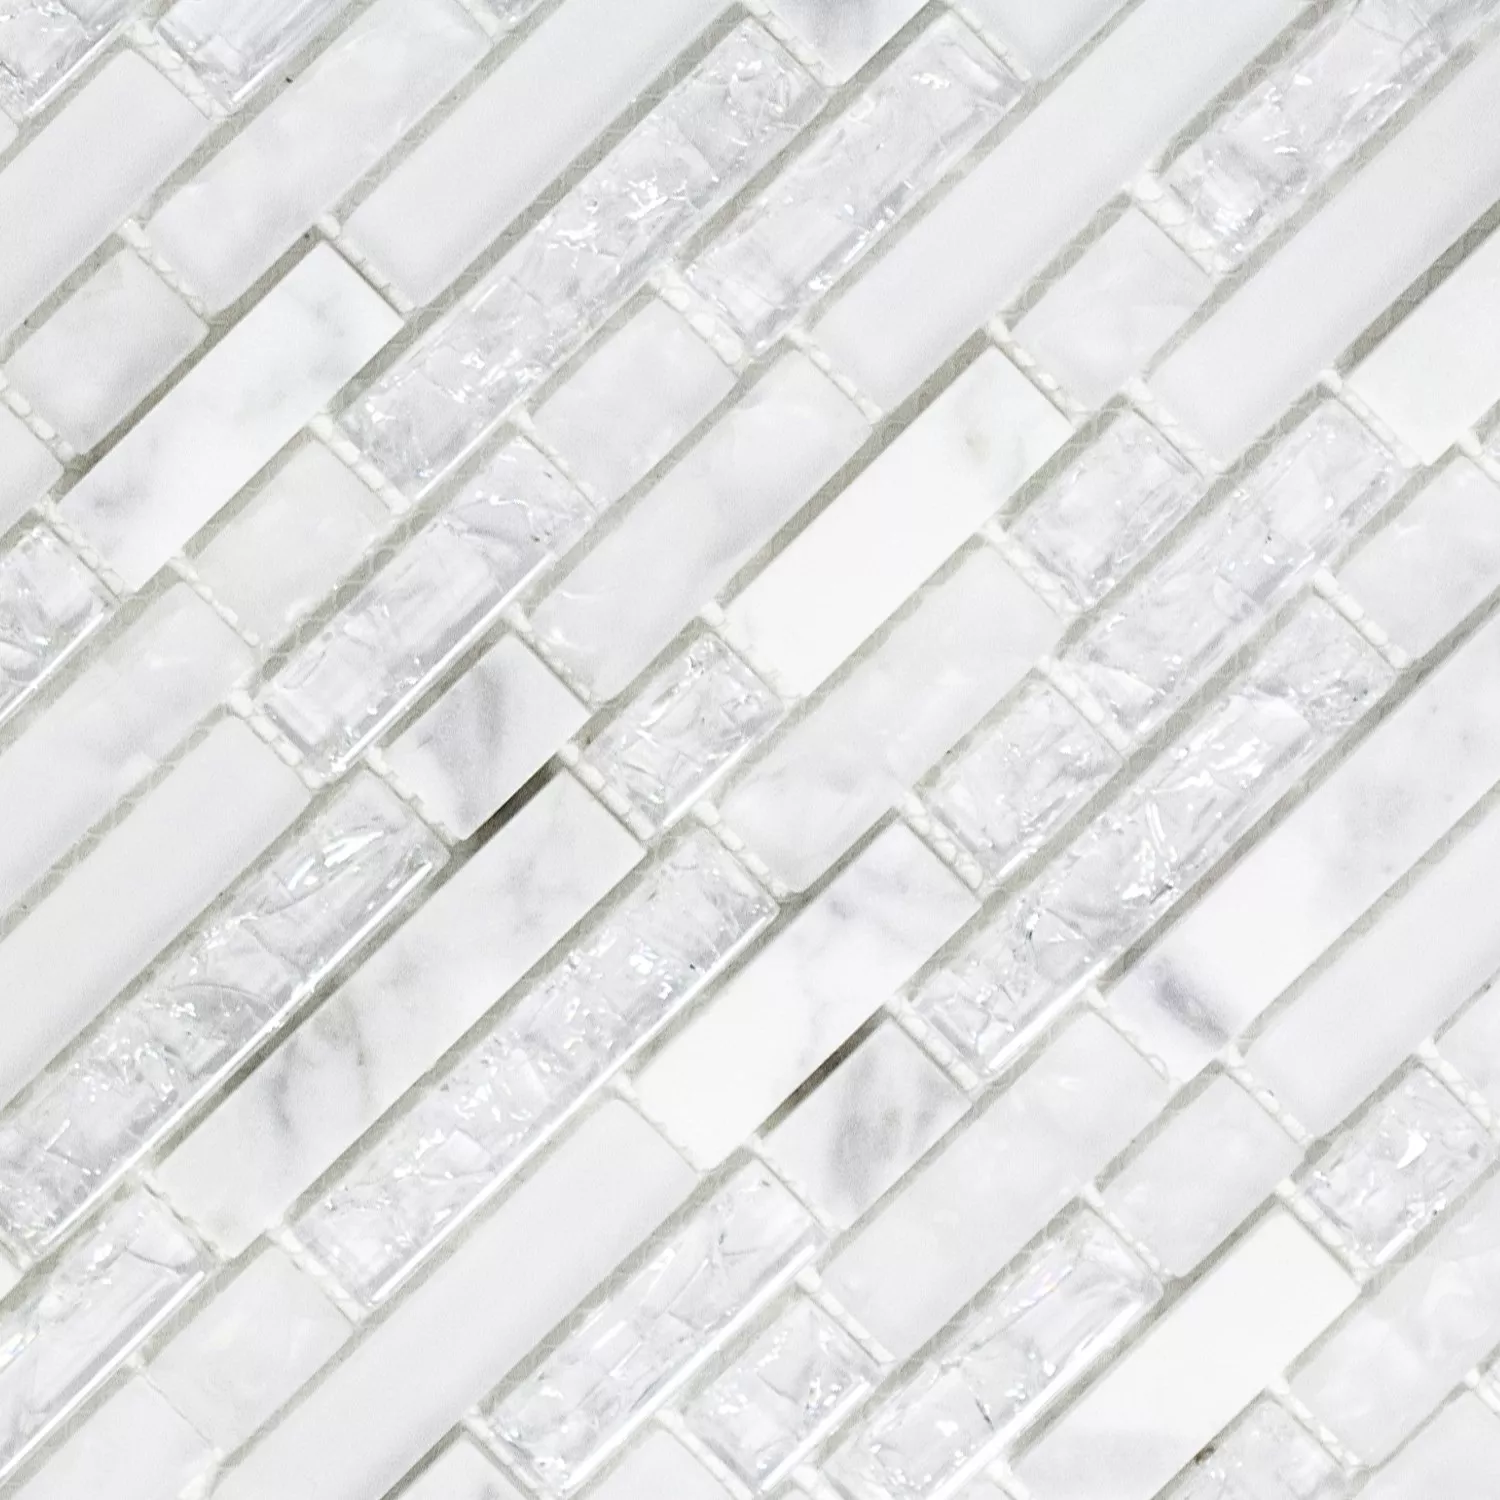 Mosaic Tiles Glass Natural Stone SmoothBroken Glass White